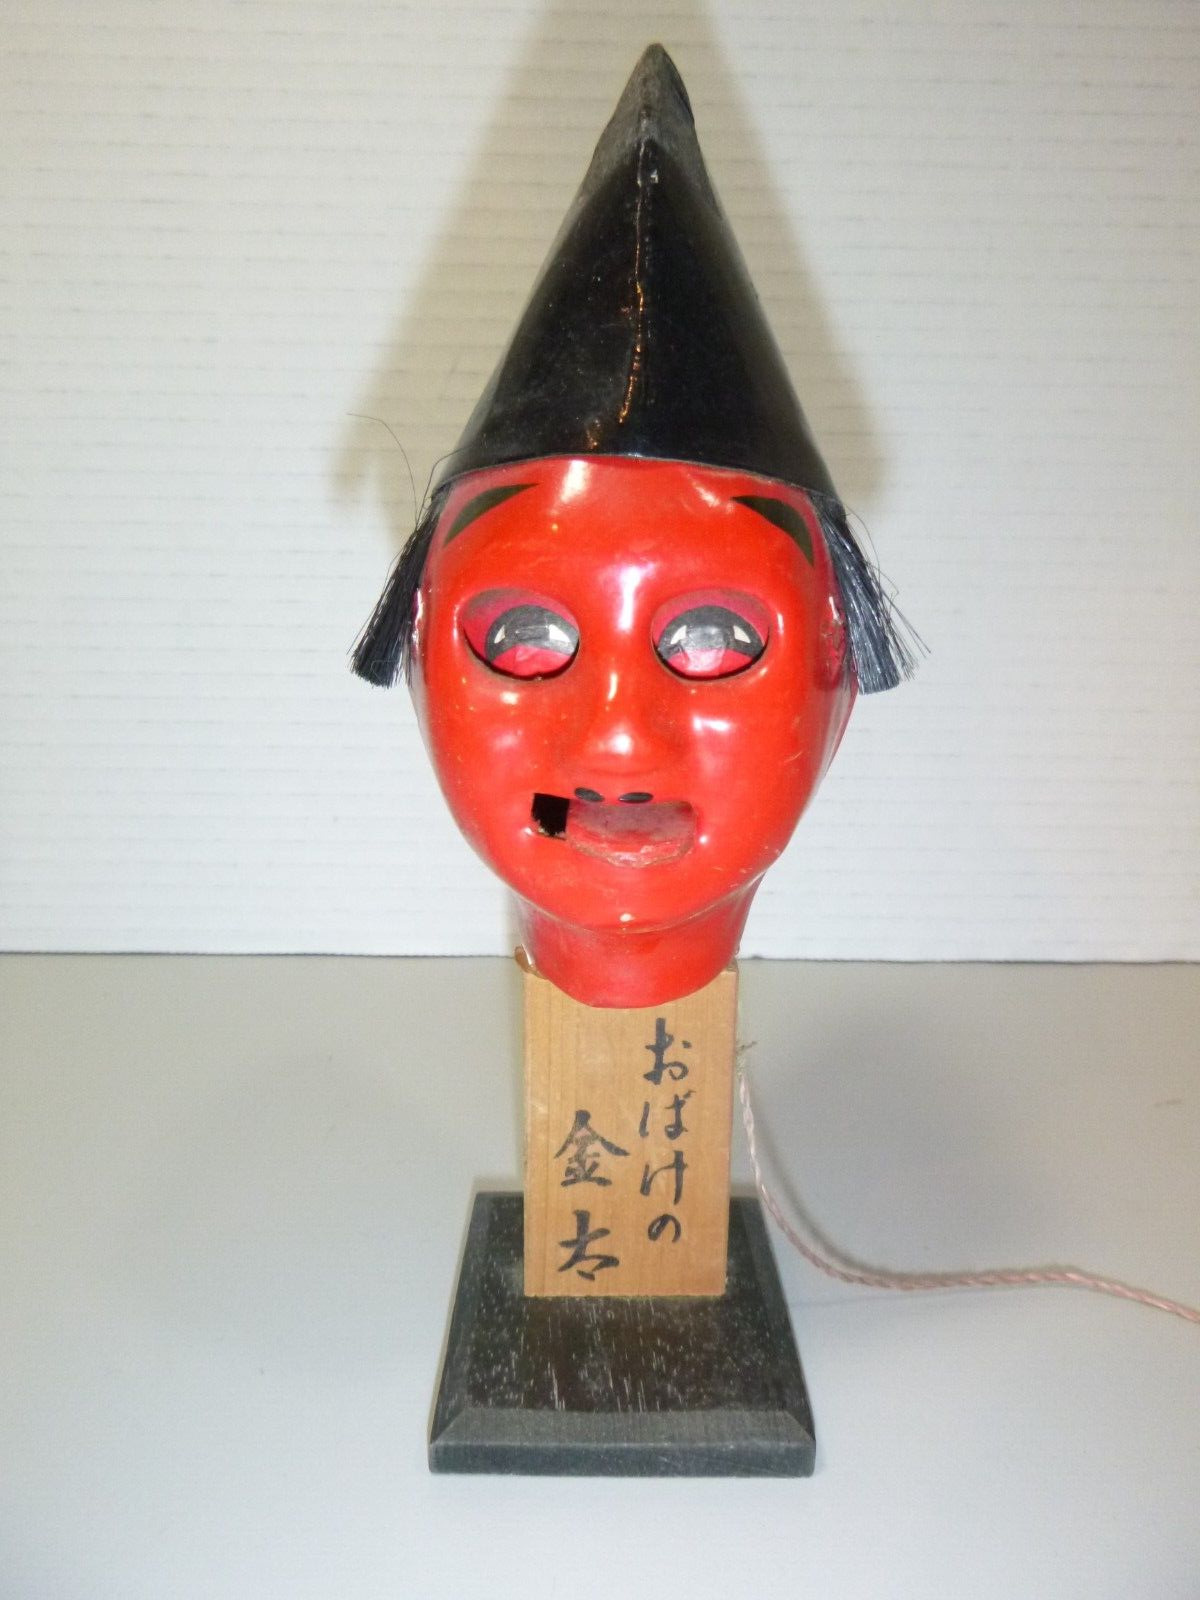 Vintage Japanese Traditional Kinta Ghost Karakuri Pull String Doll - Works